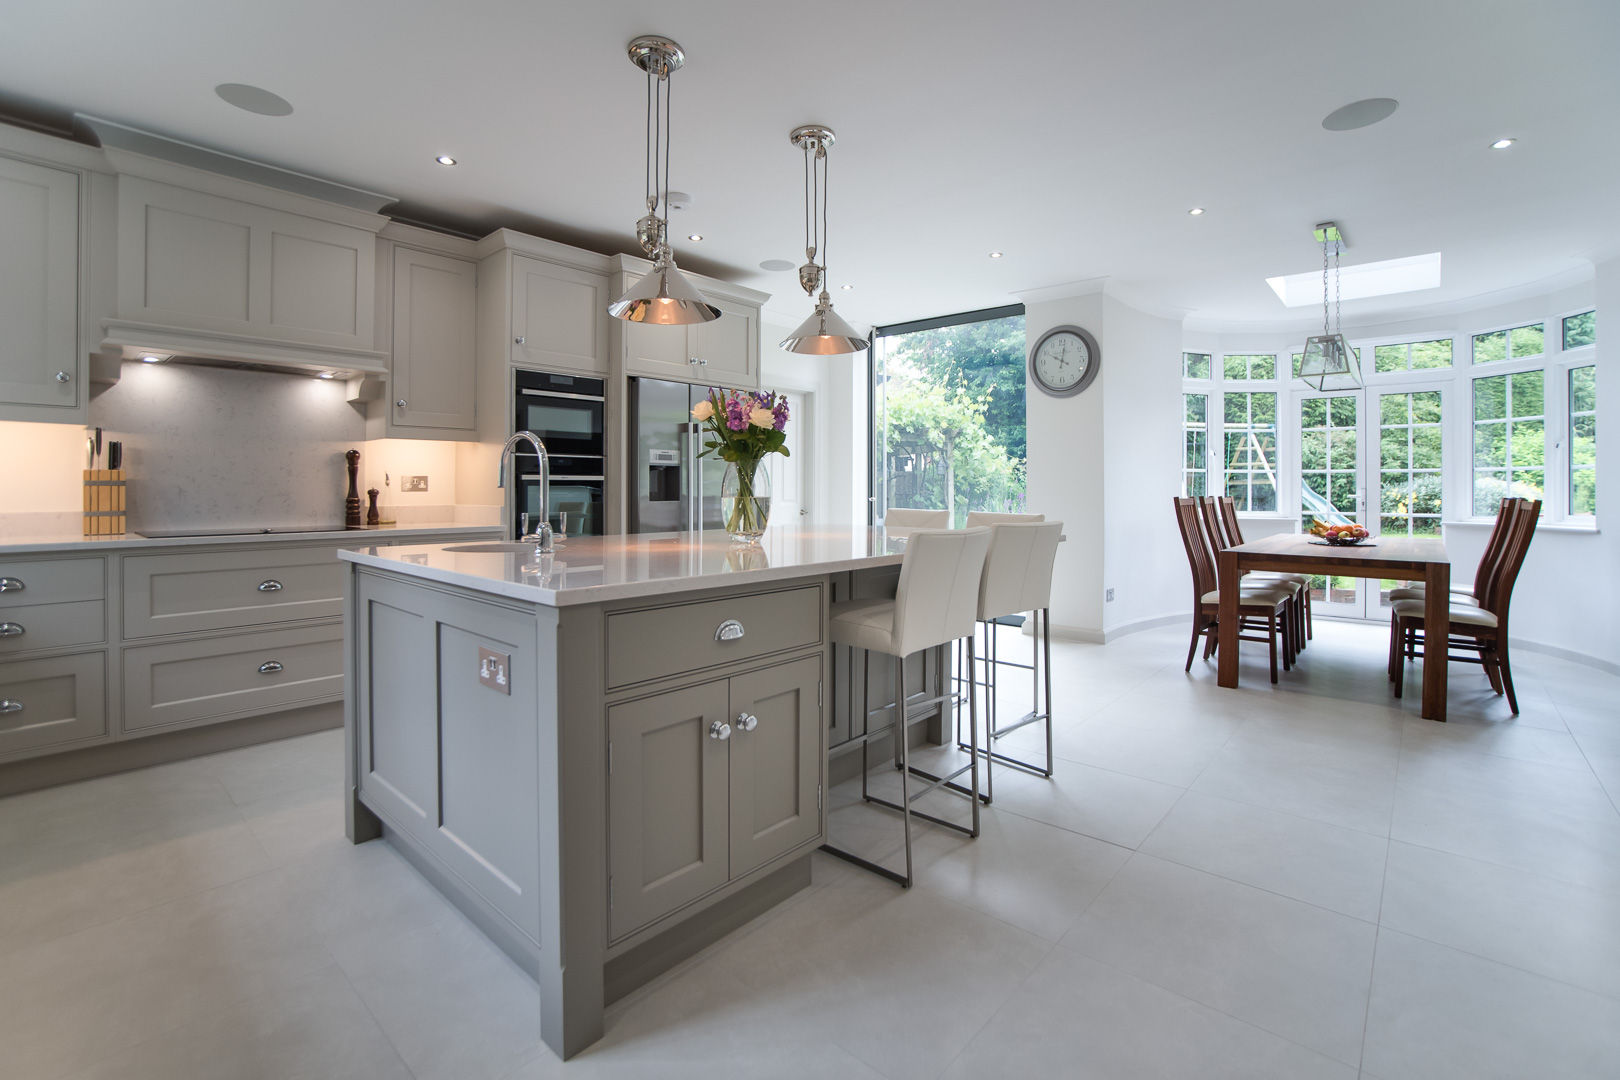 Beautiful bespoke kitchen in Hertfordshire by John Ladbury John Ladbury and Company Cocinas modernas: Ideas, imágenes y decoración modern,bespoke,minimalist